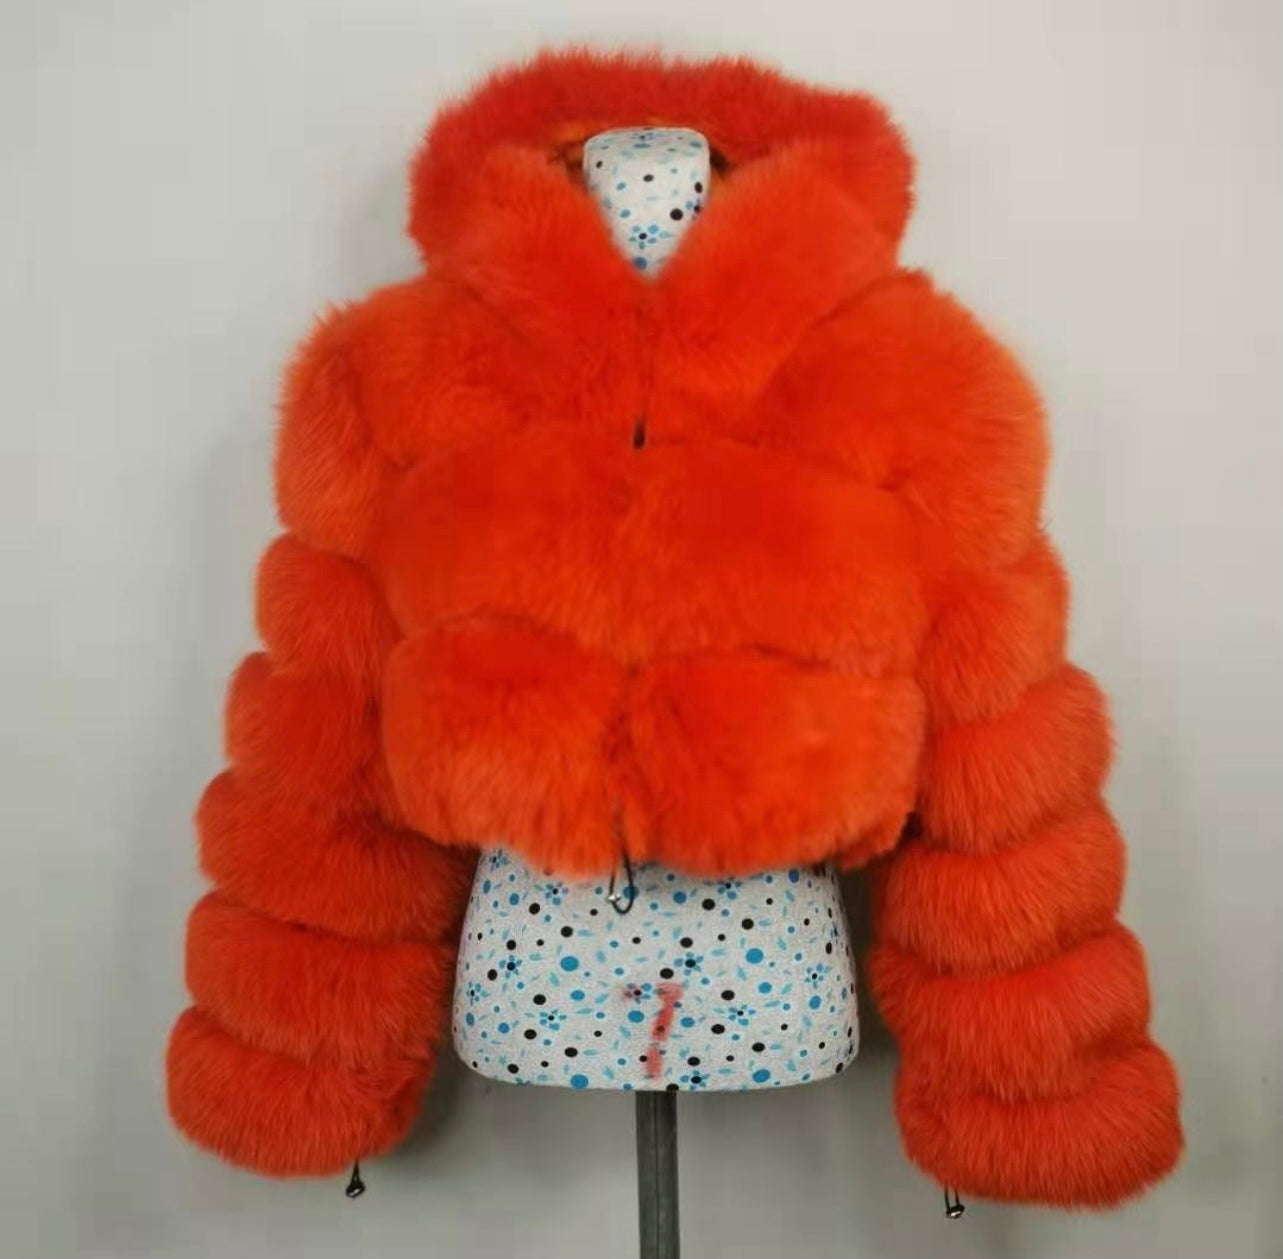 Custom Cropped Coats (Any color combo)